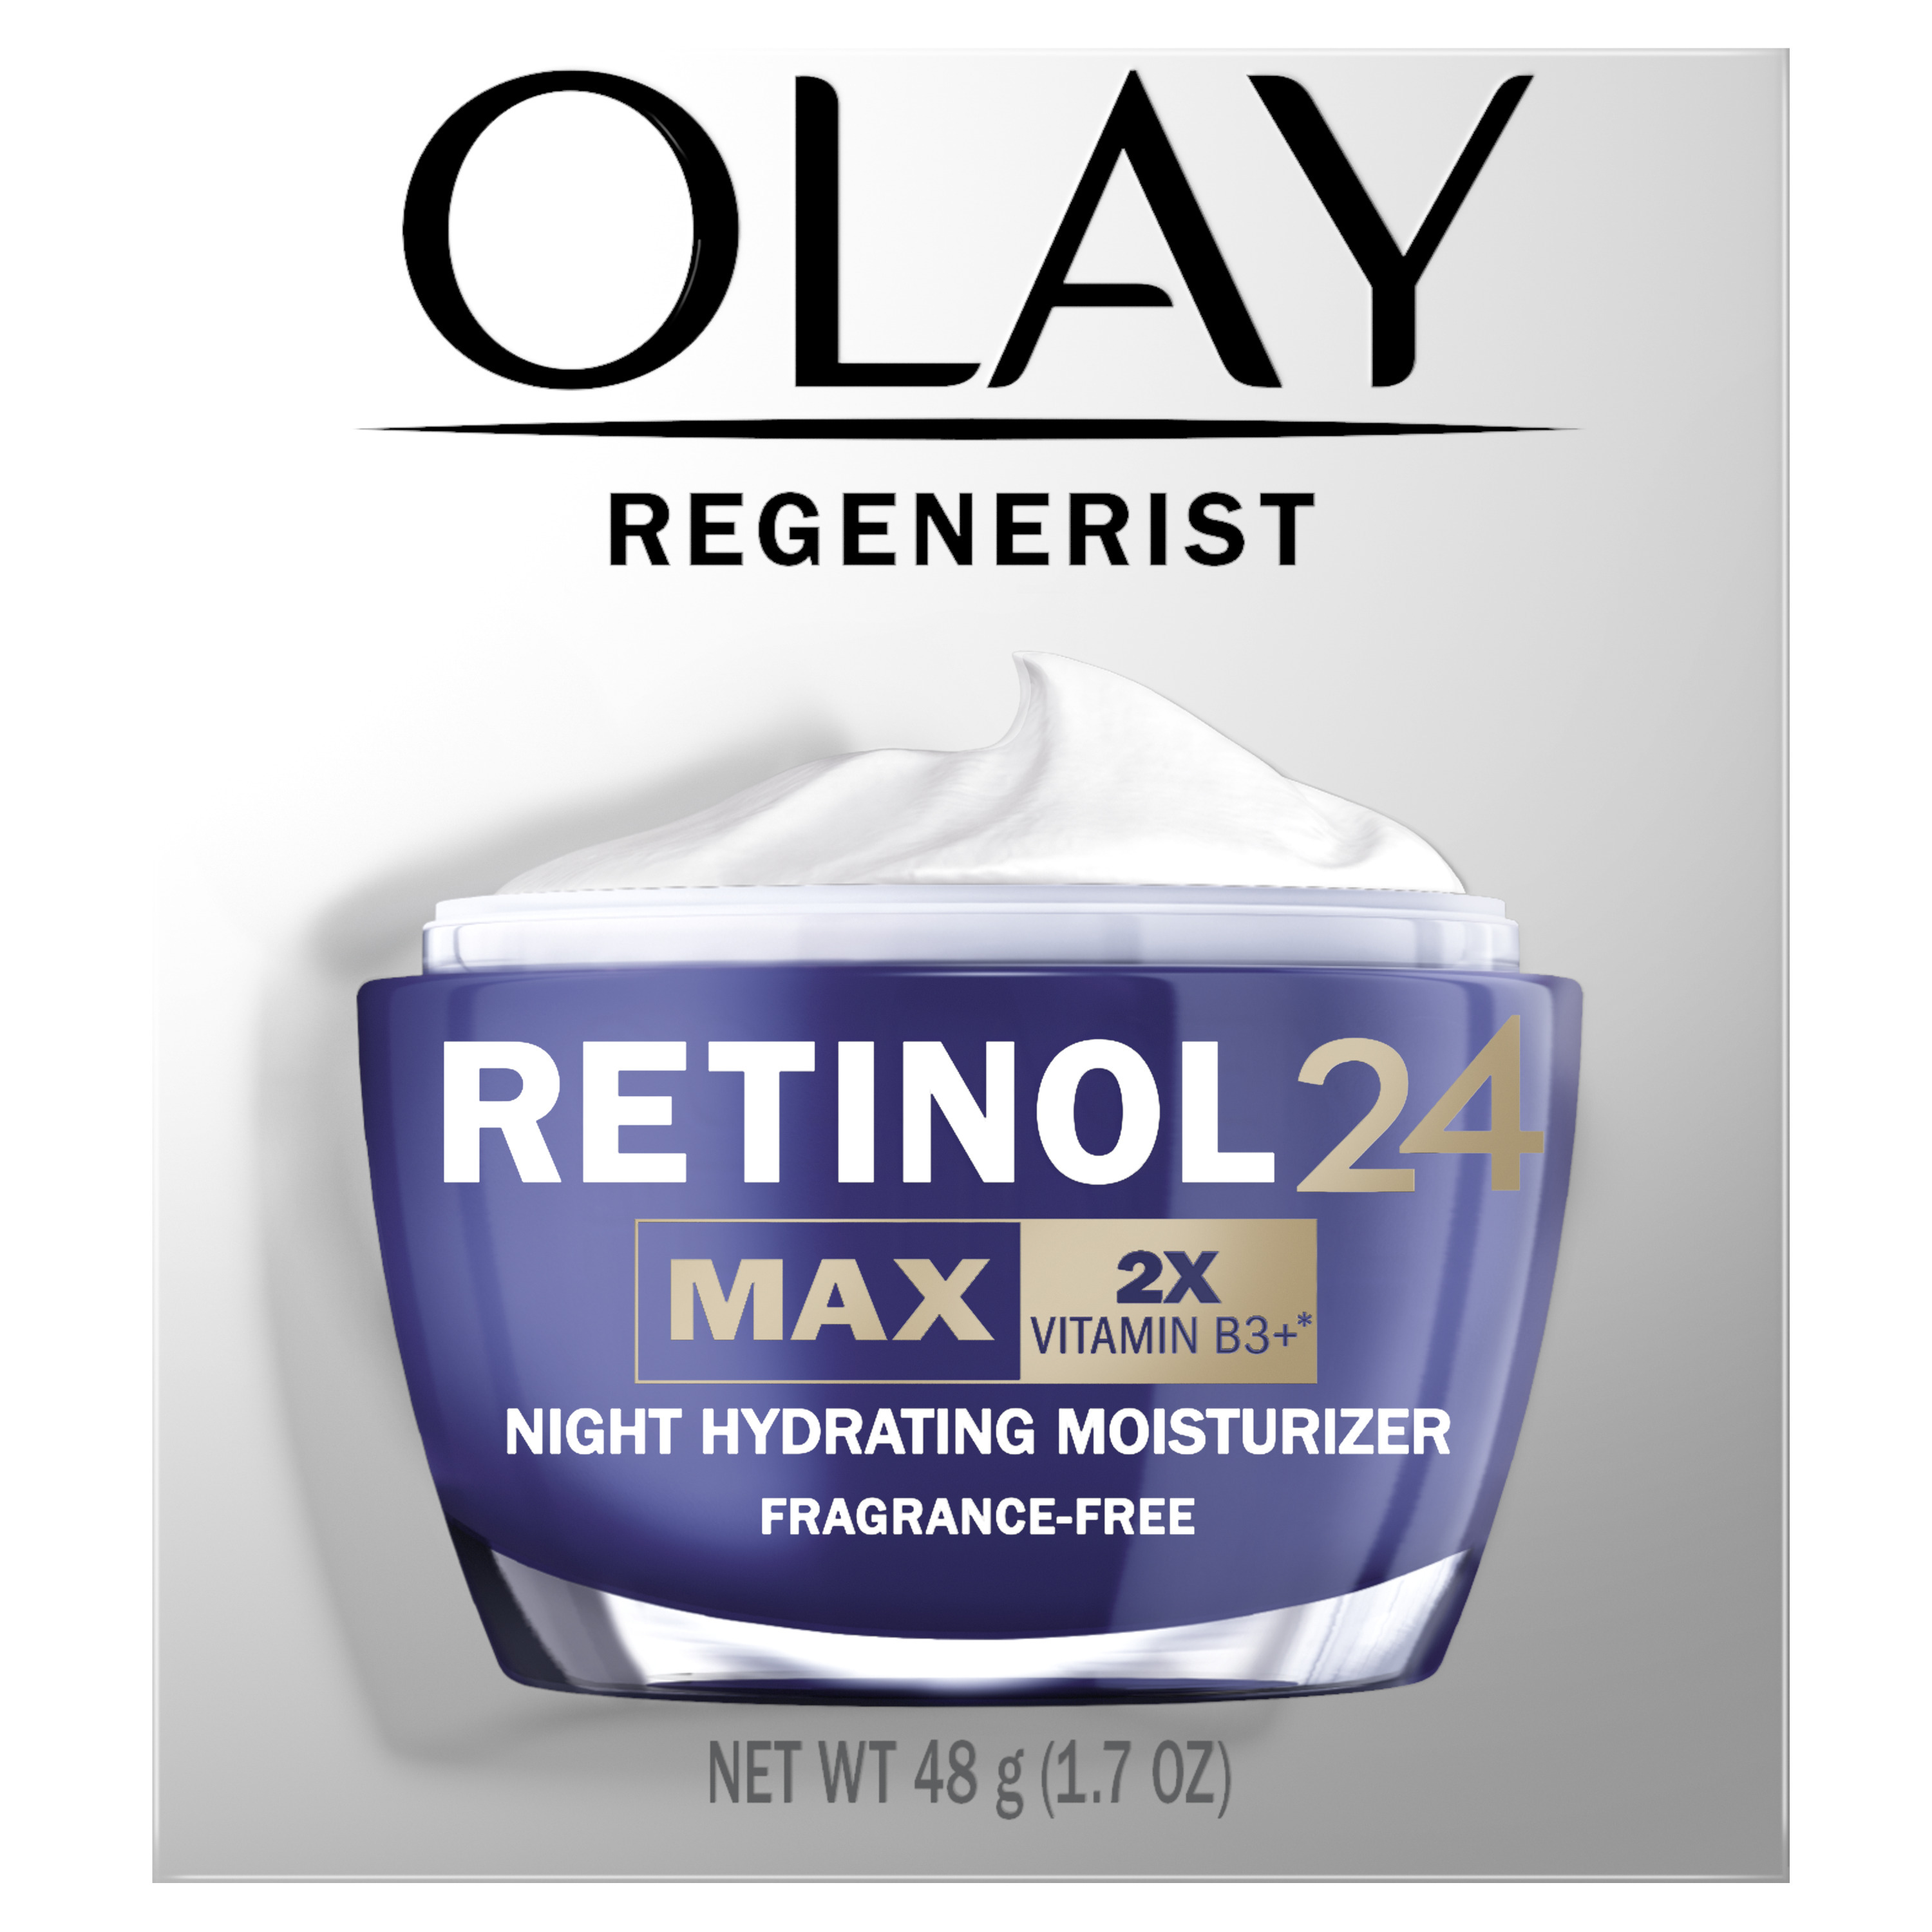 Olay Skincare Regenerist Retinol 24 MAX Night Face Moisturizer, Anti-Aging Cream, 1.7 oz Jar - image 10 of 14